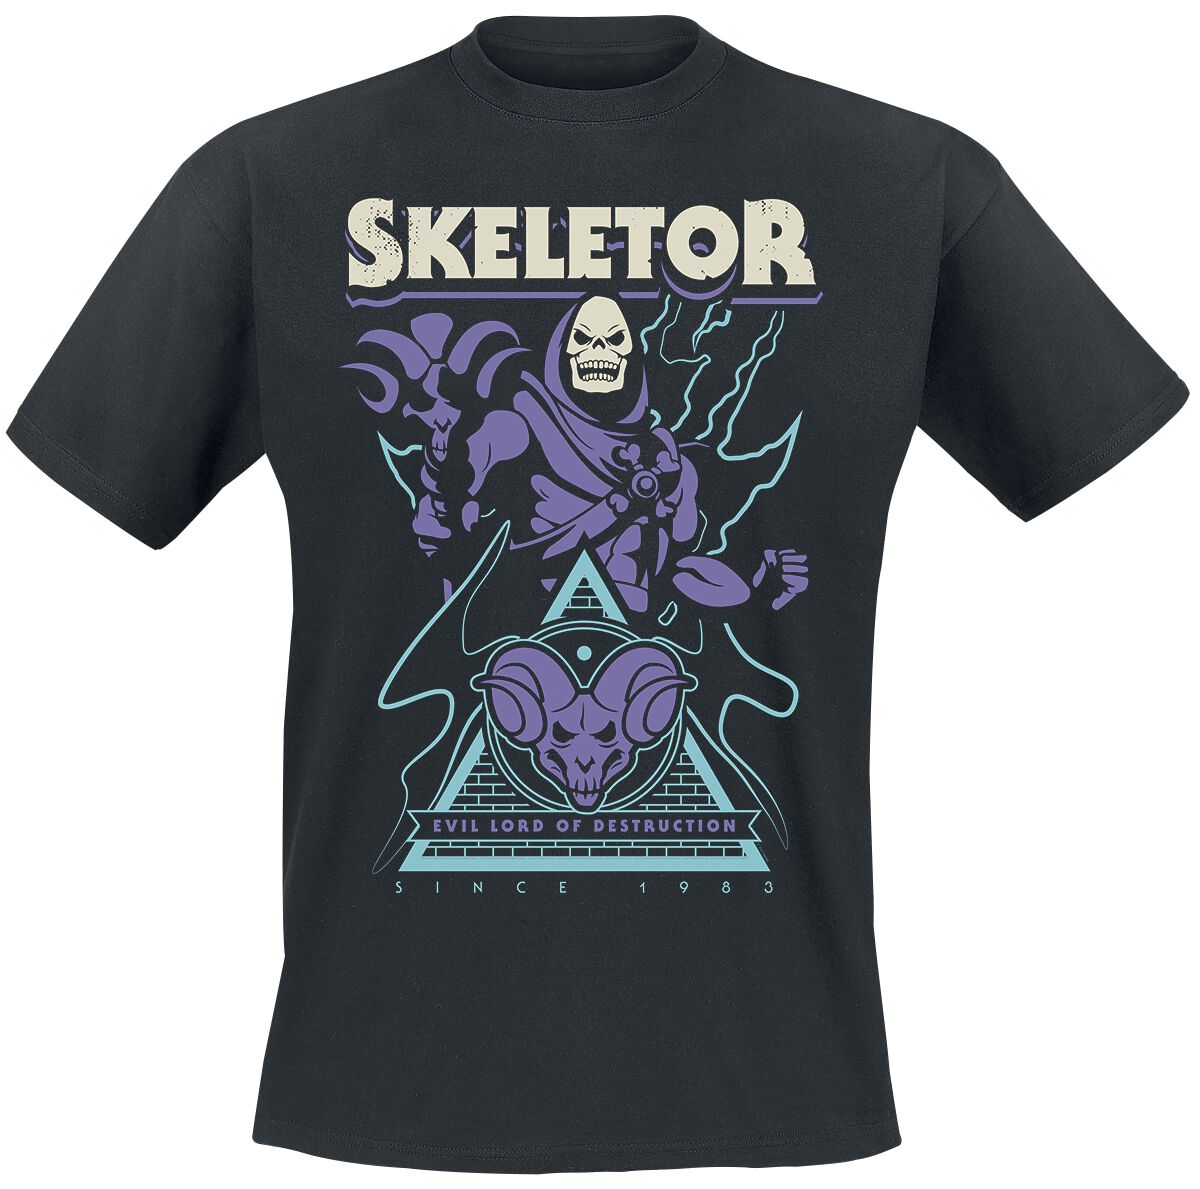 He-Man Skeletor - Pyramide T-Shirt schwarz in M